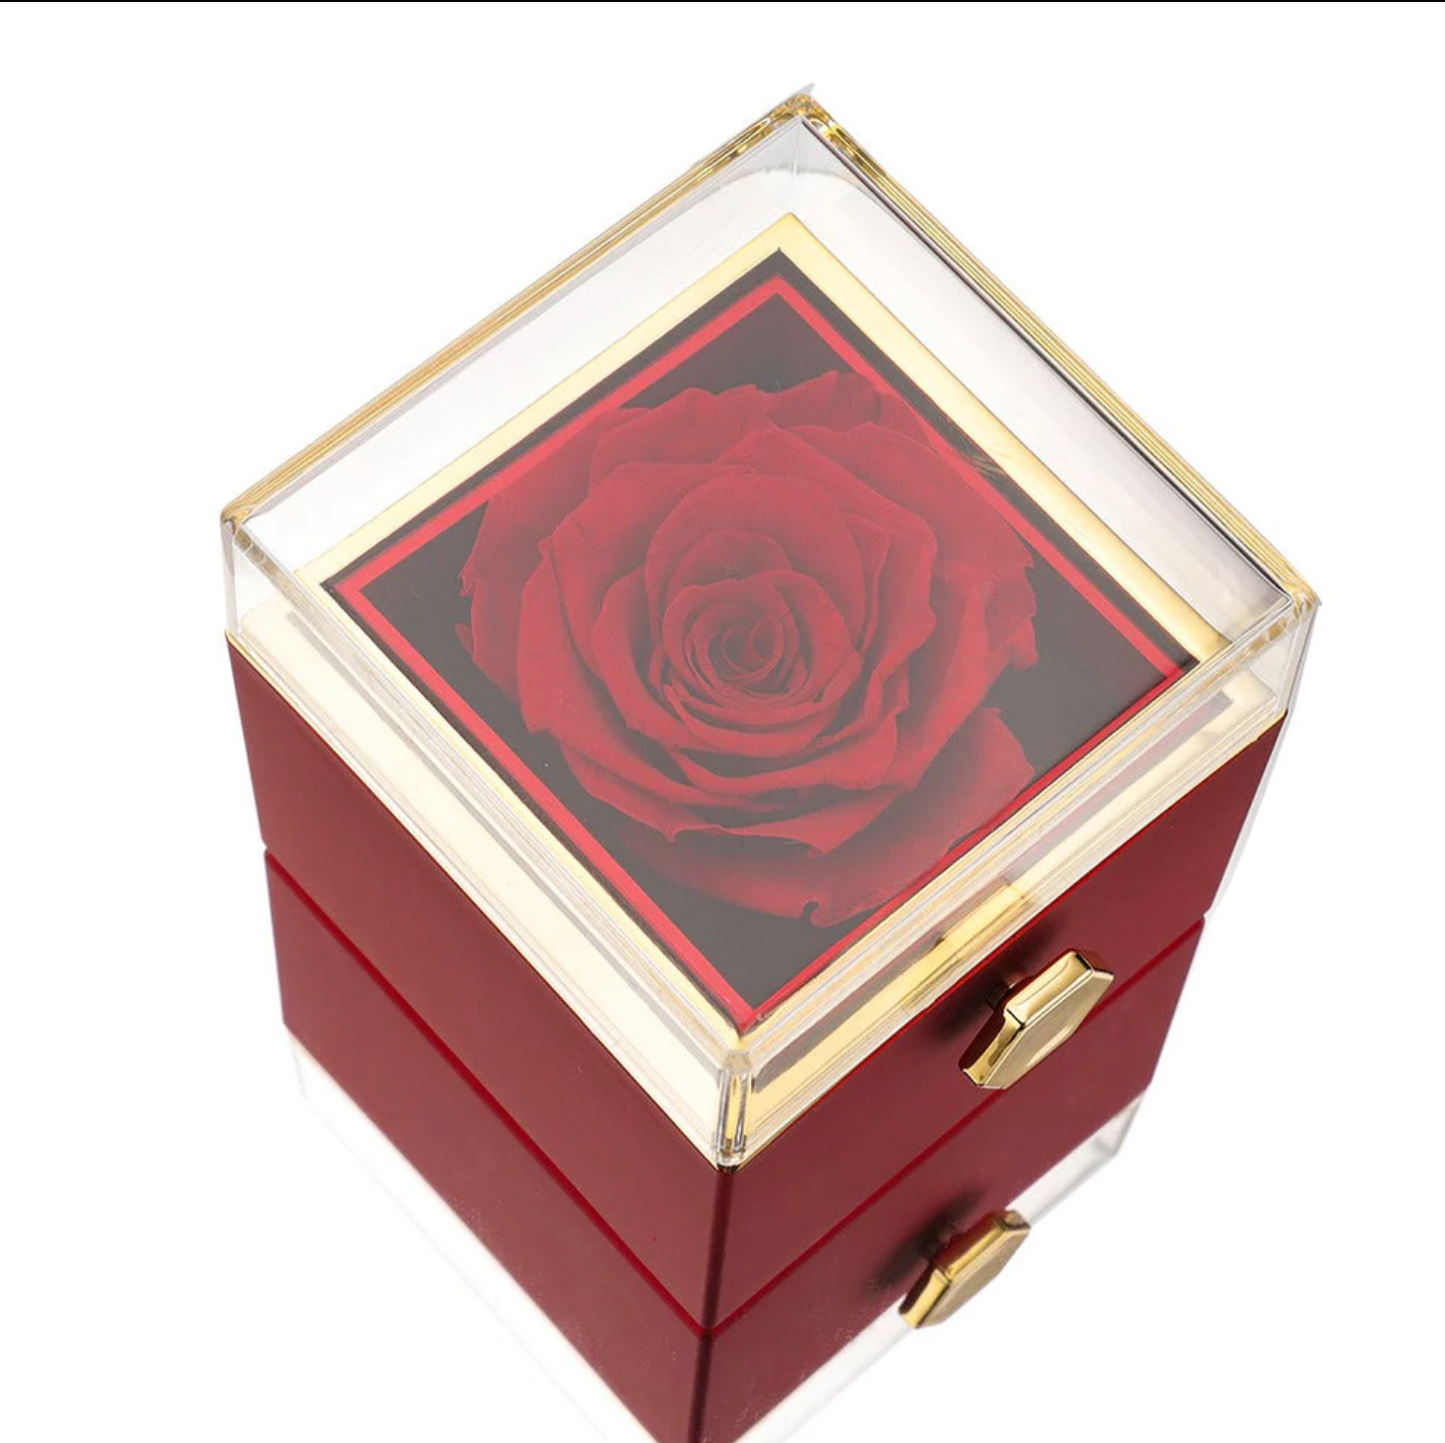 Rose box packaging